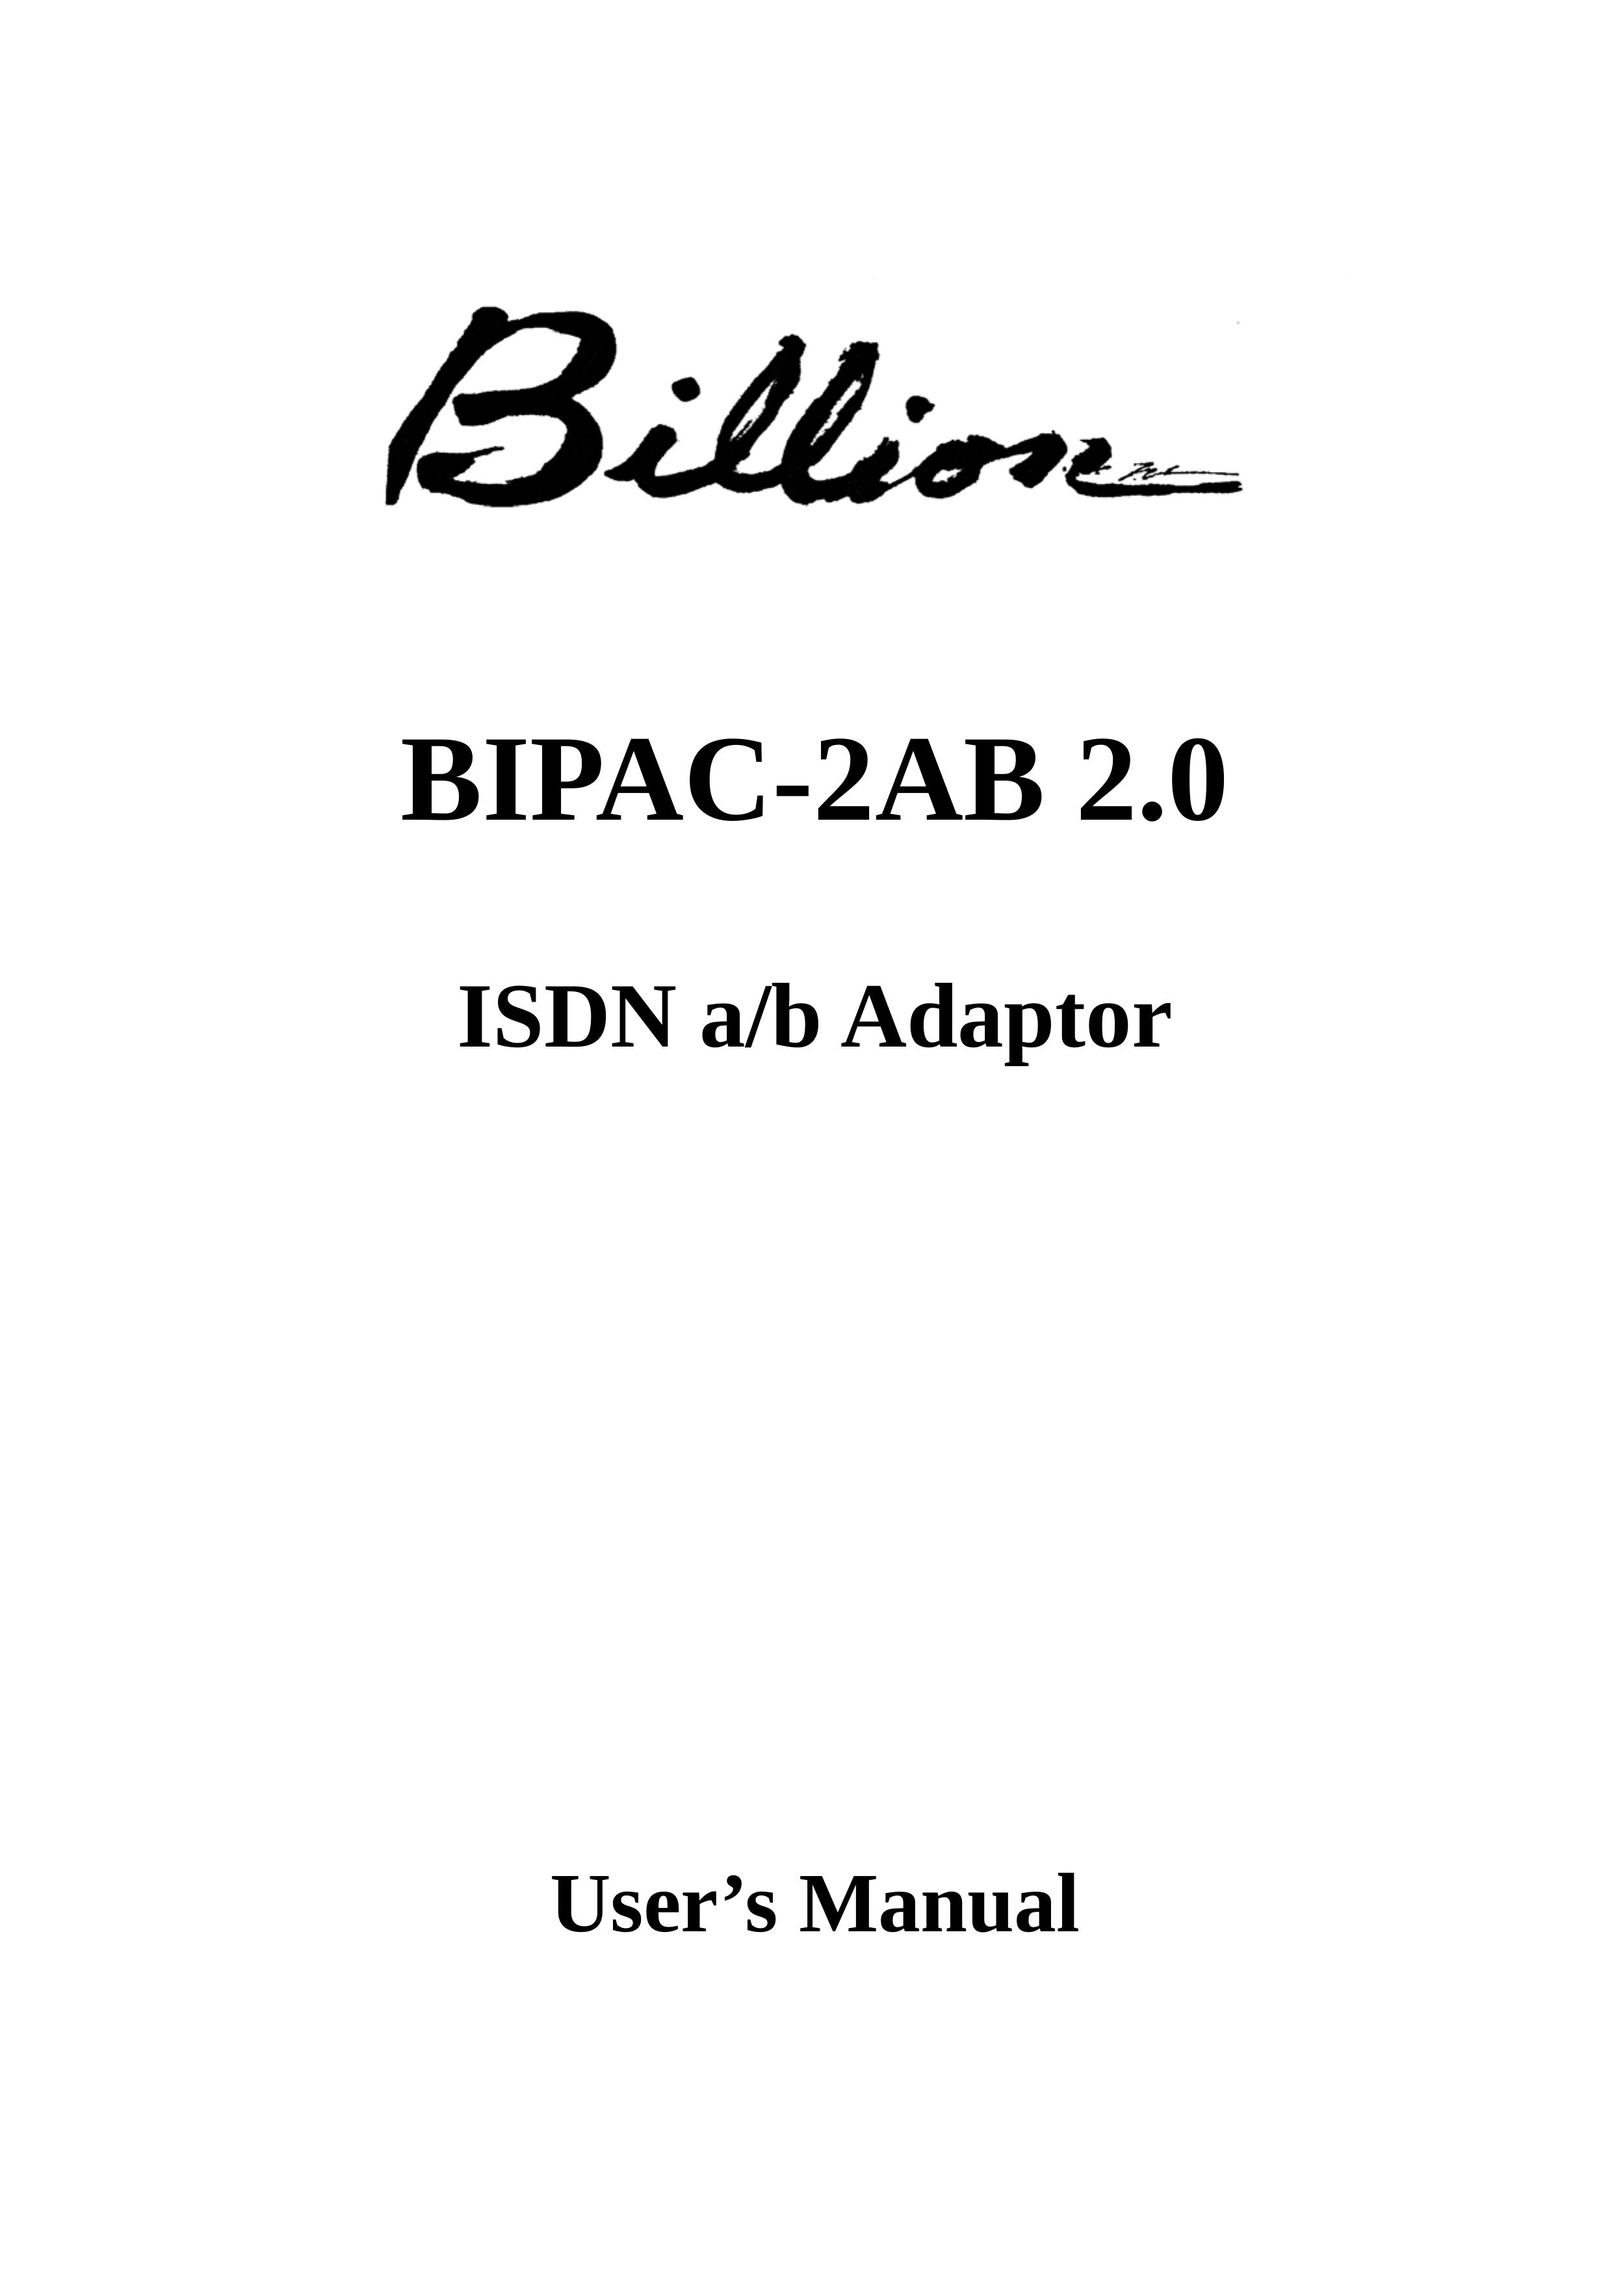 Billion Electric Company BIPAC-2AB 2.0 Network Card User Manual